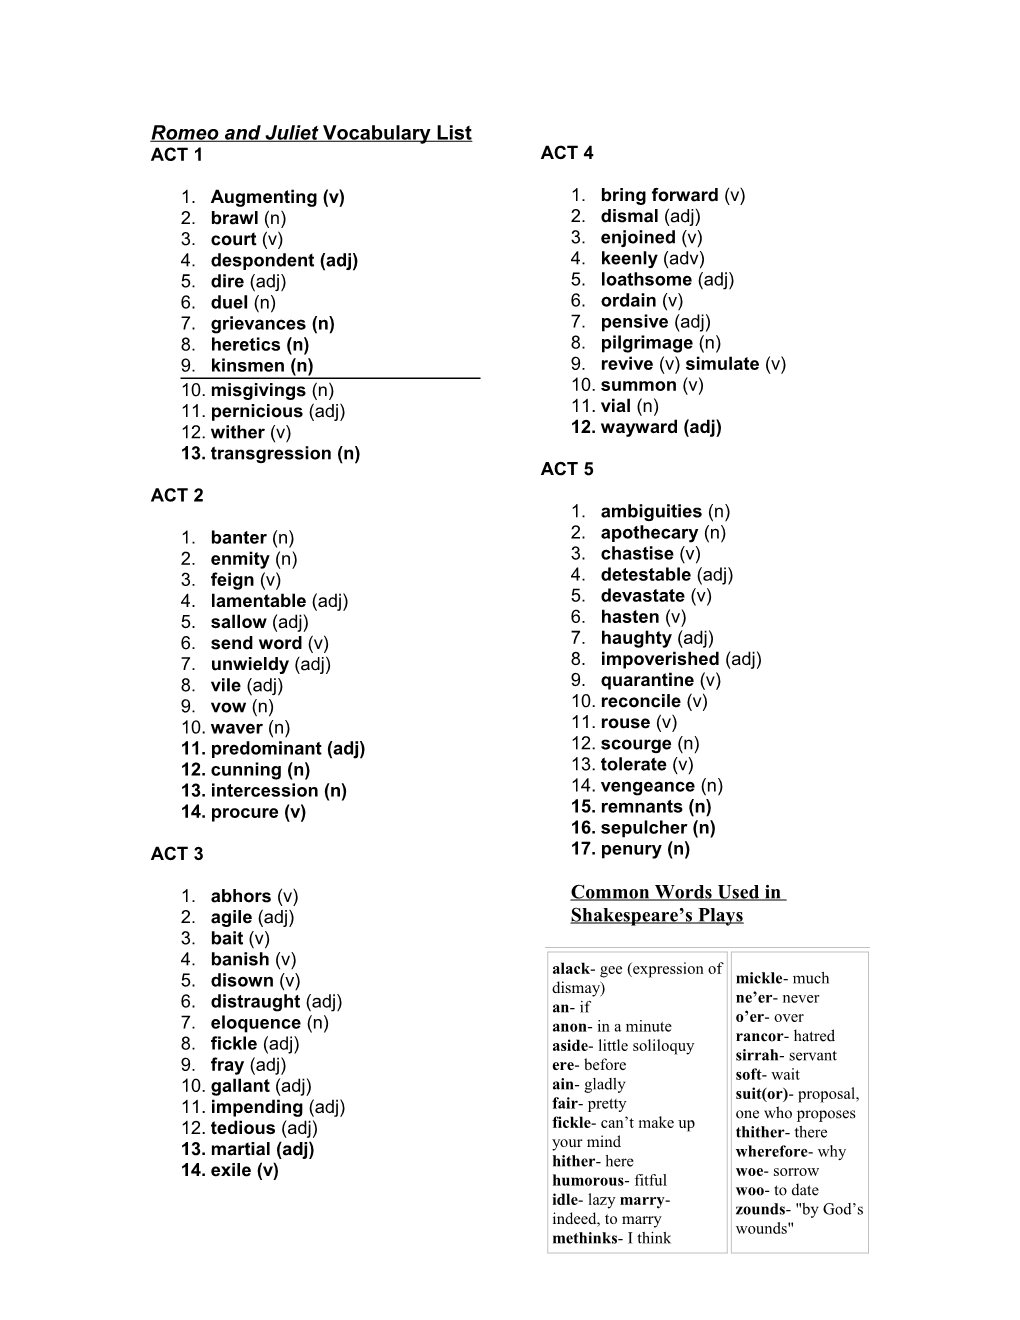 Romeo and Juliet Vocabulary List s1